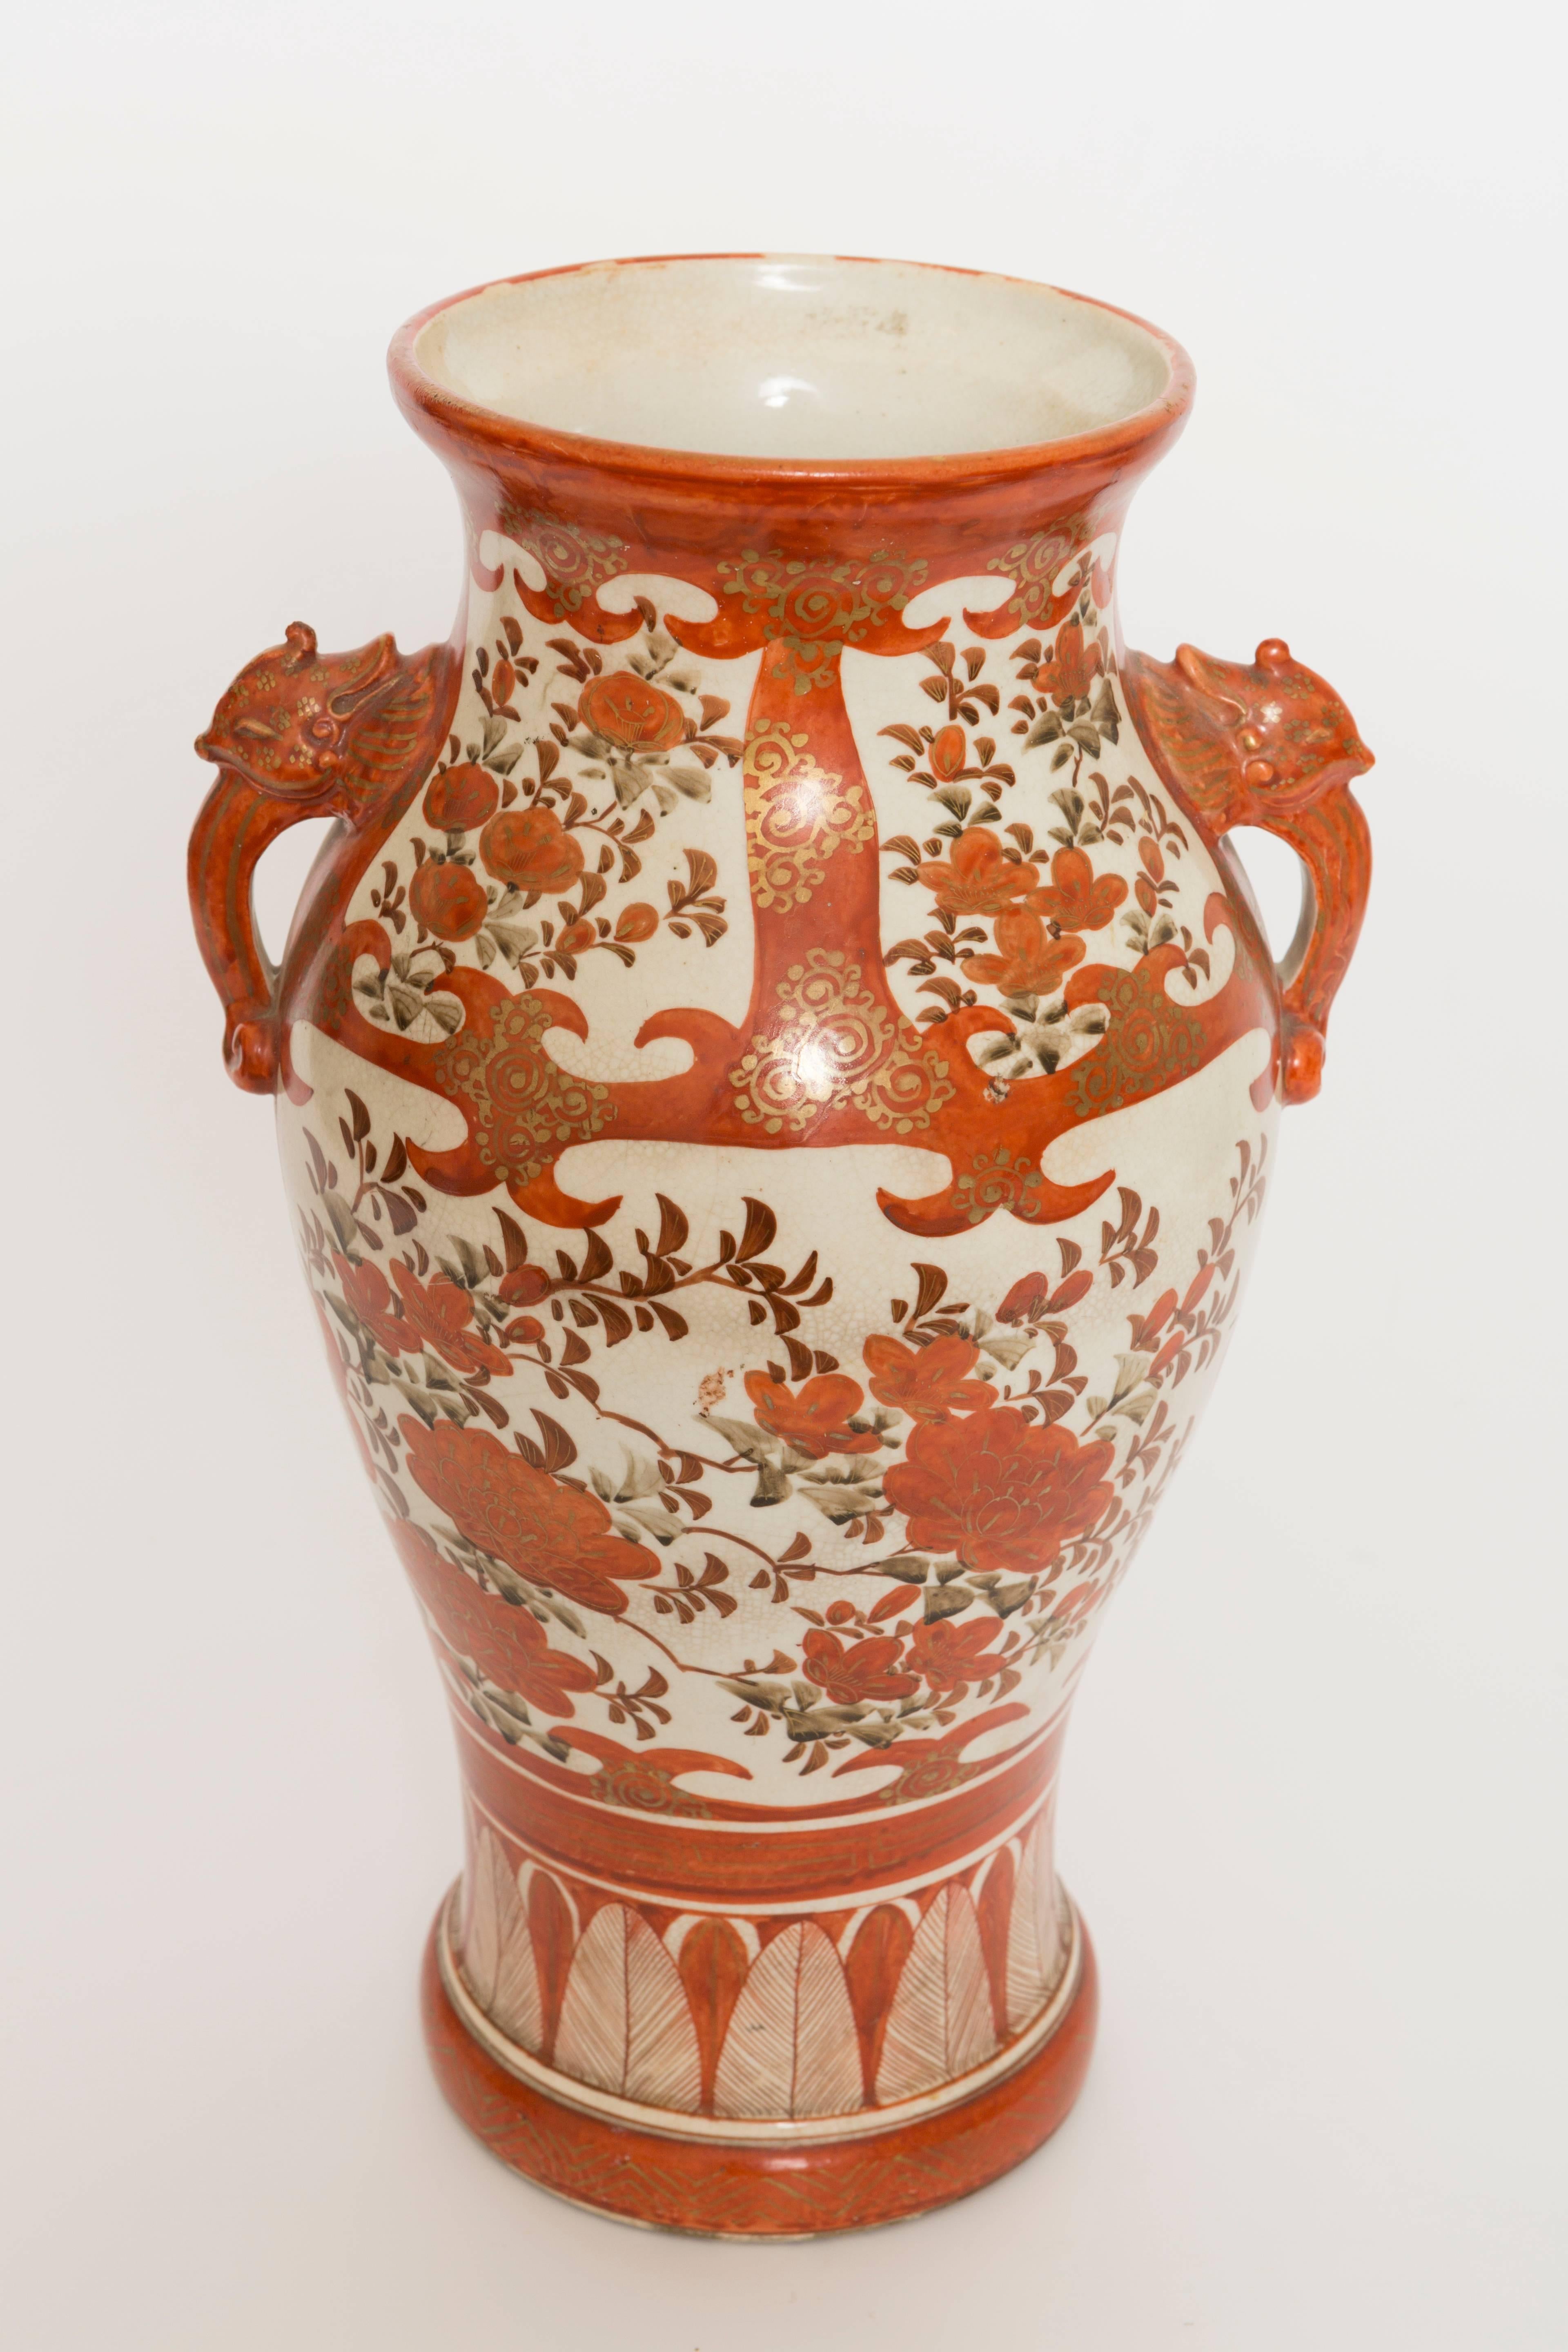 Canton porcelain vase with Classic oriental motif, circa mid-19th century.